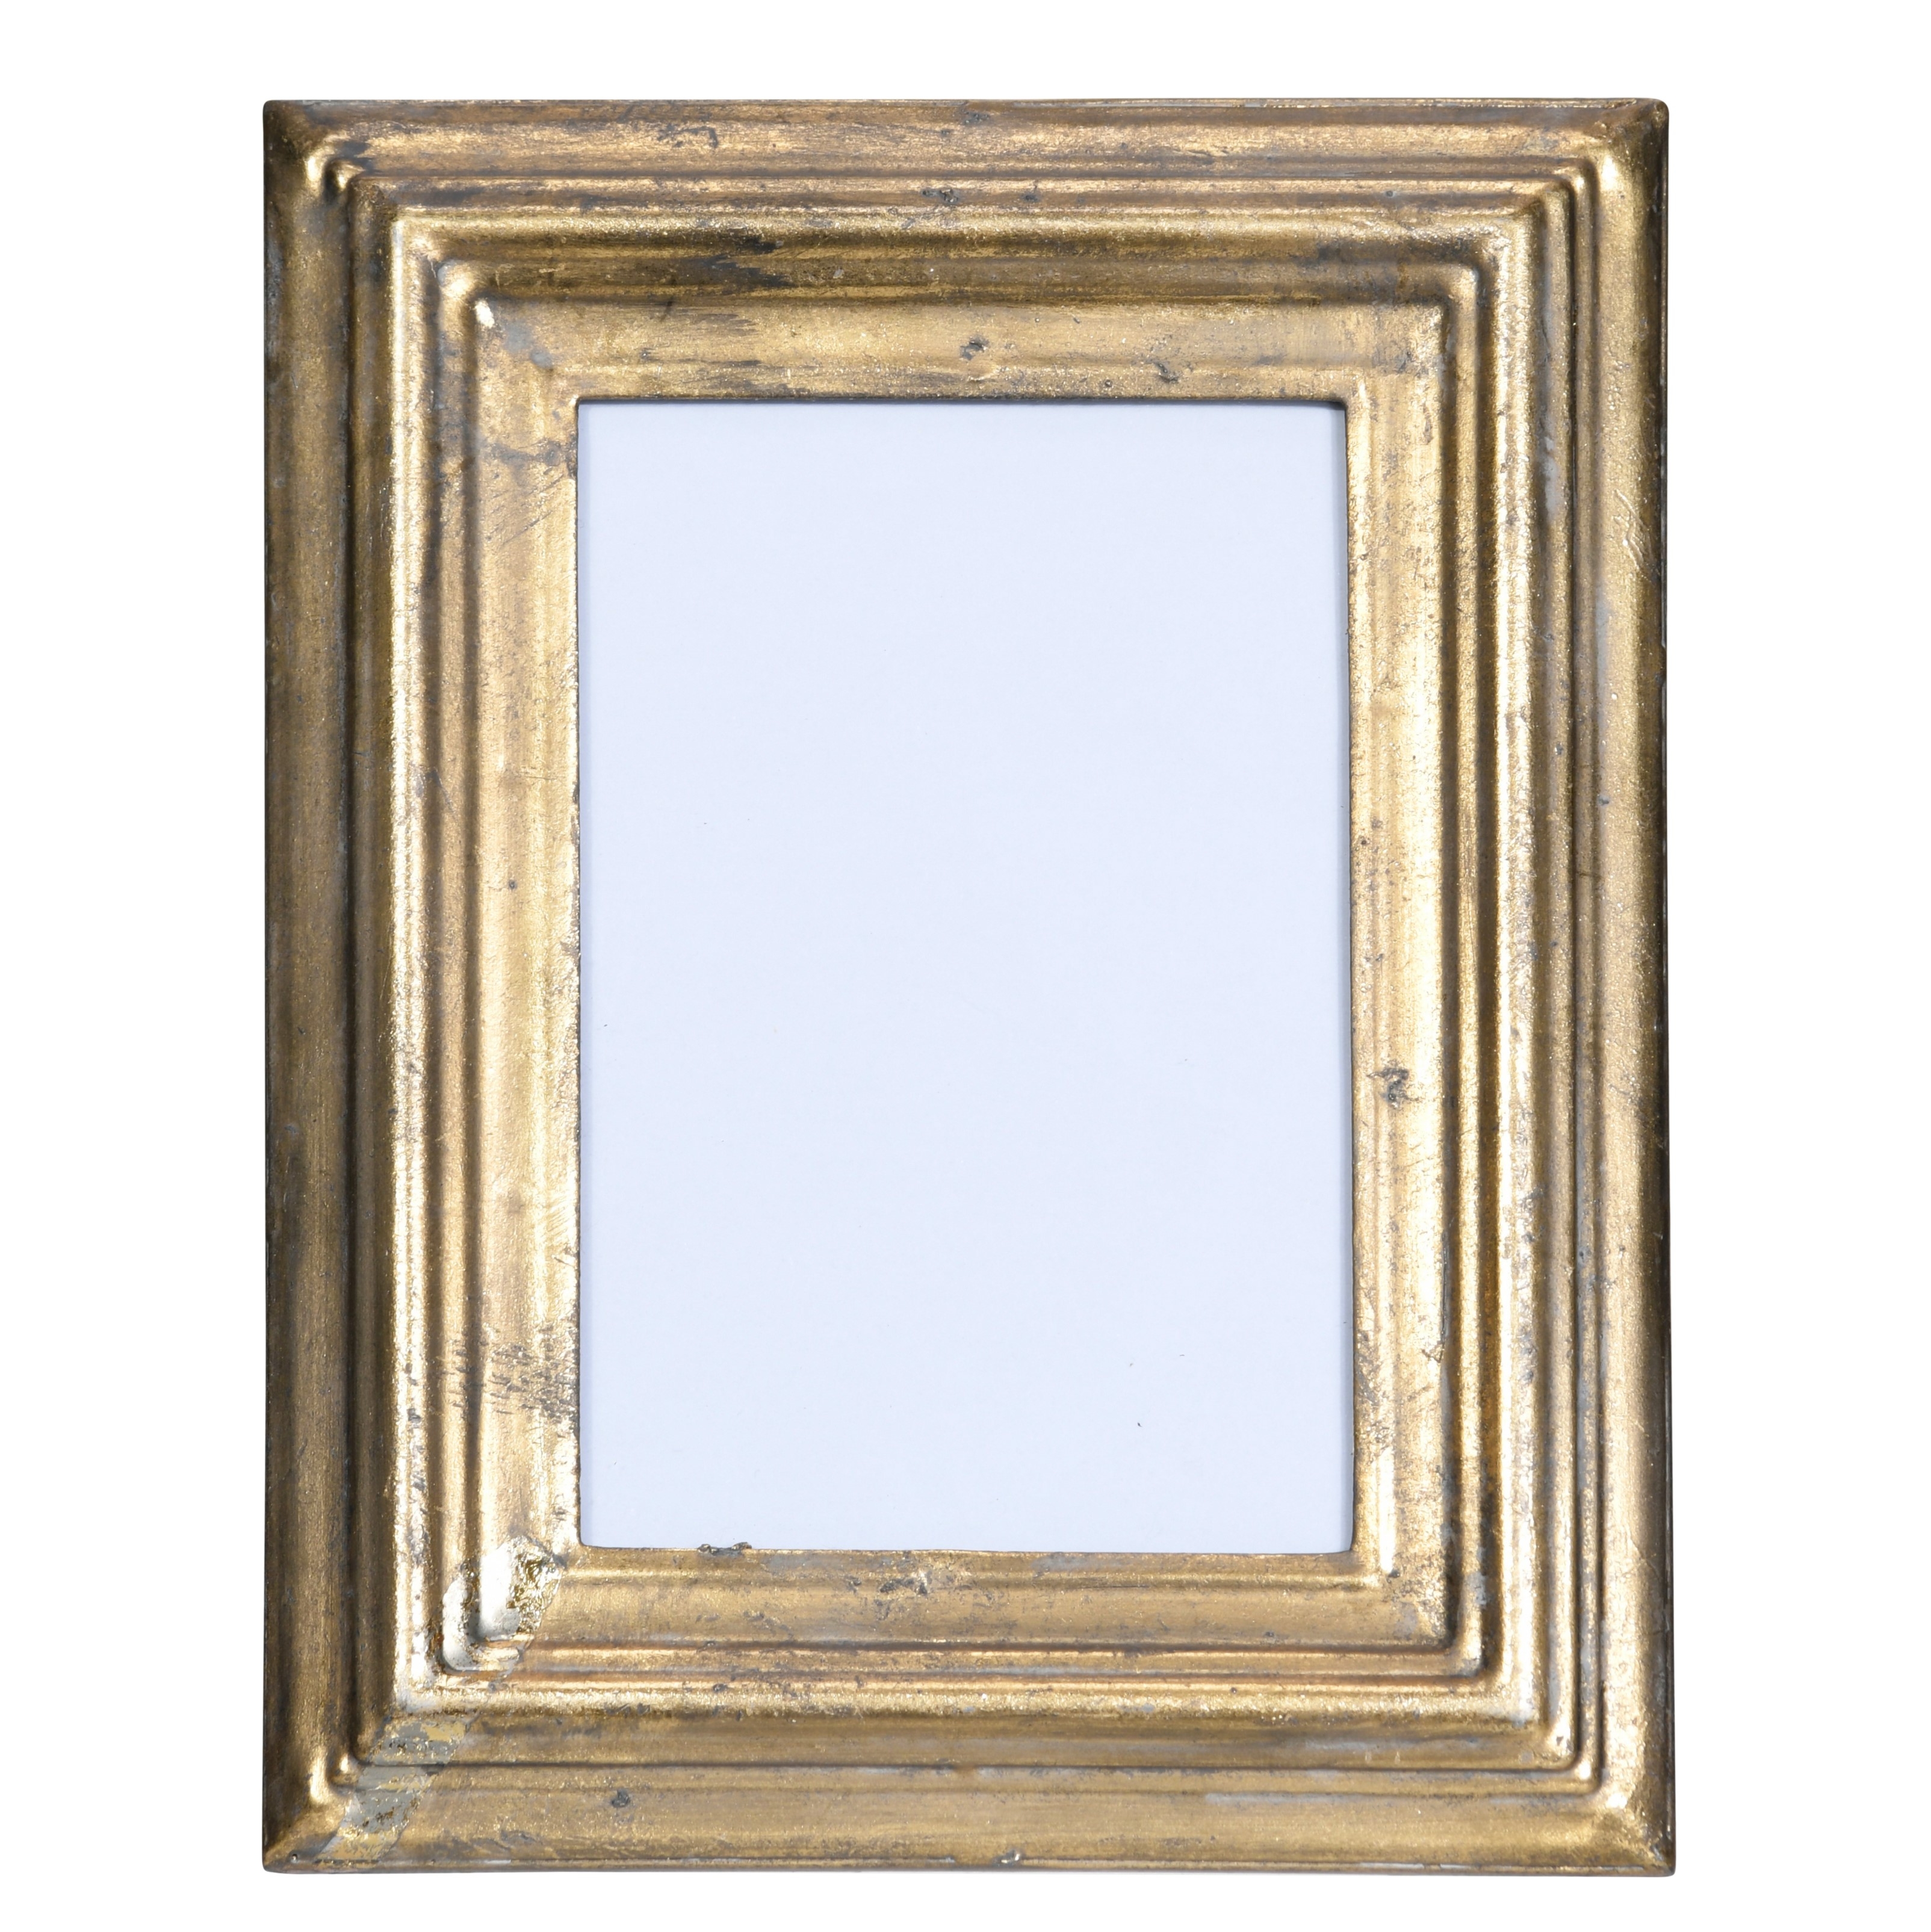 Juneau Antiqued Picture Frame, Gold, 4" x 6" - Image 0